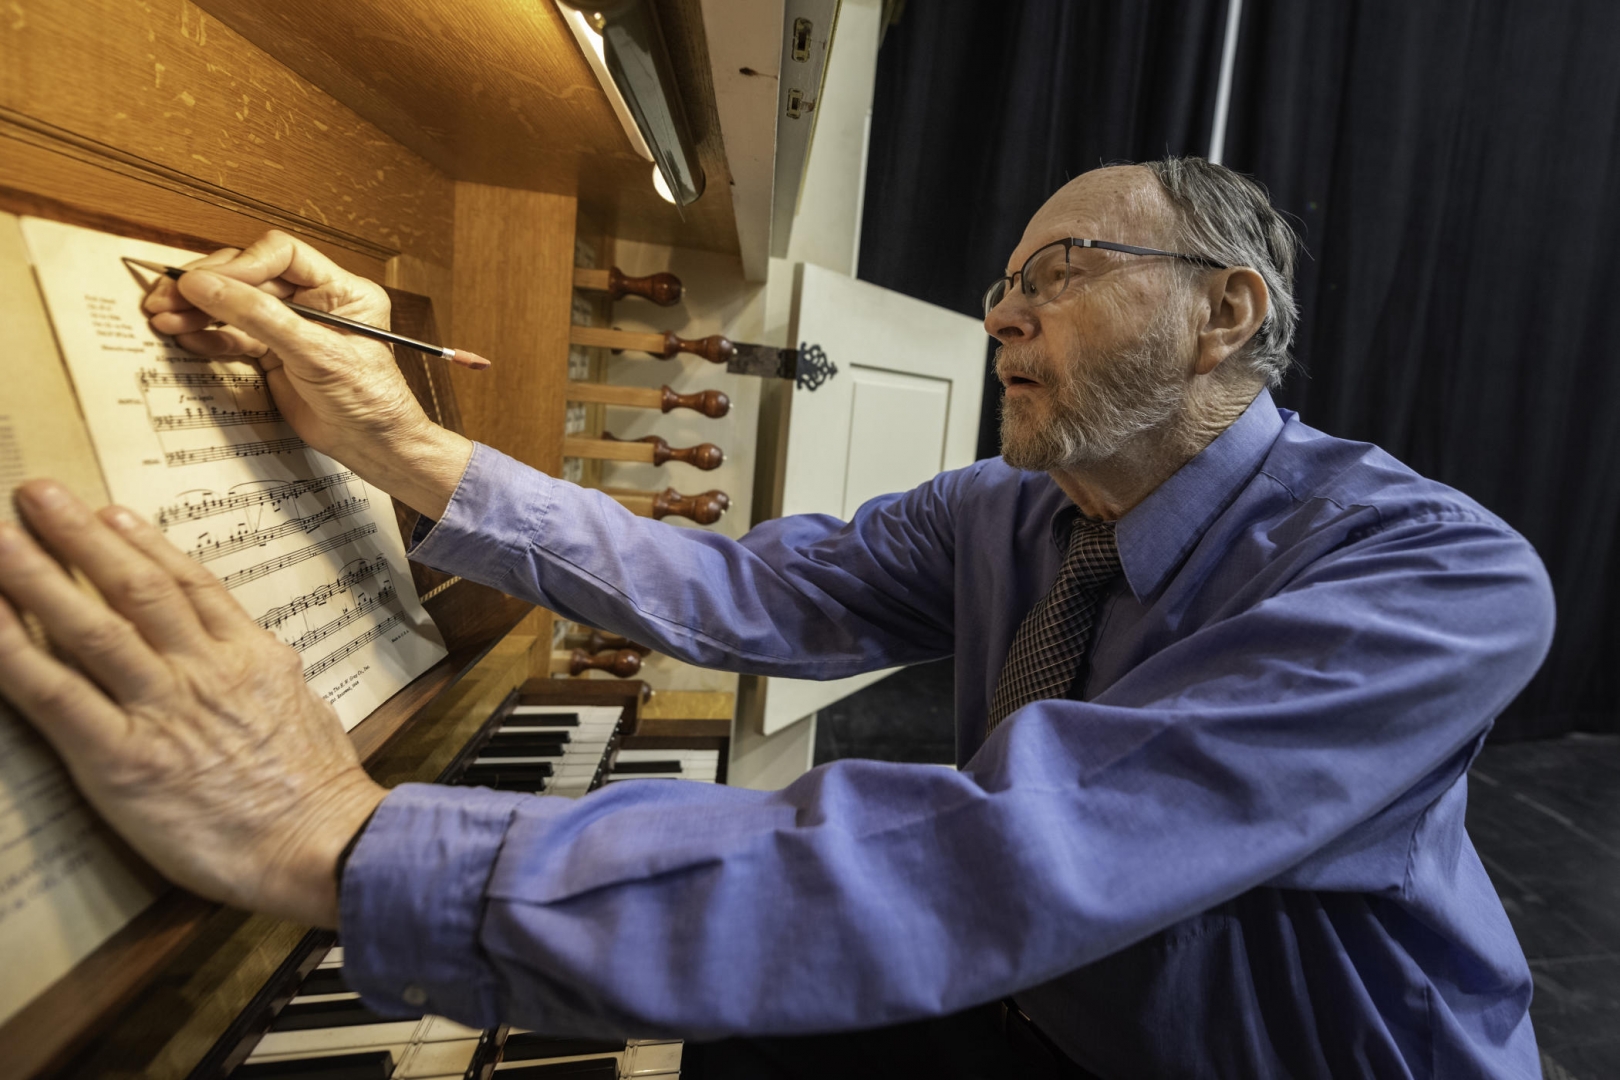 David Rothe makes notes on a sheet of music while seated at the organ keyboard.